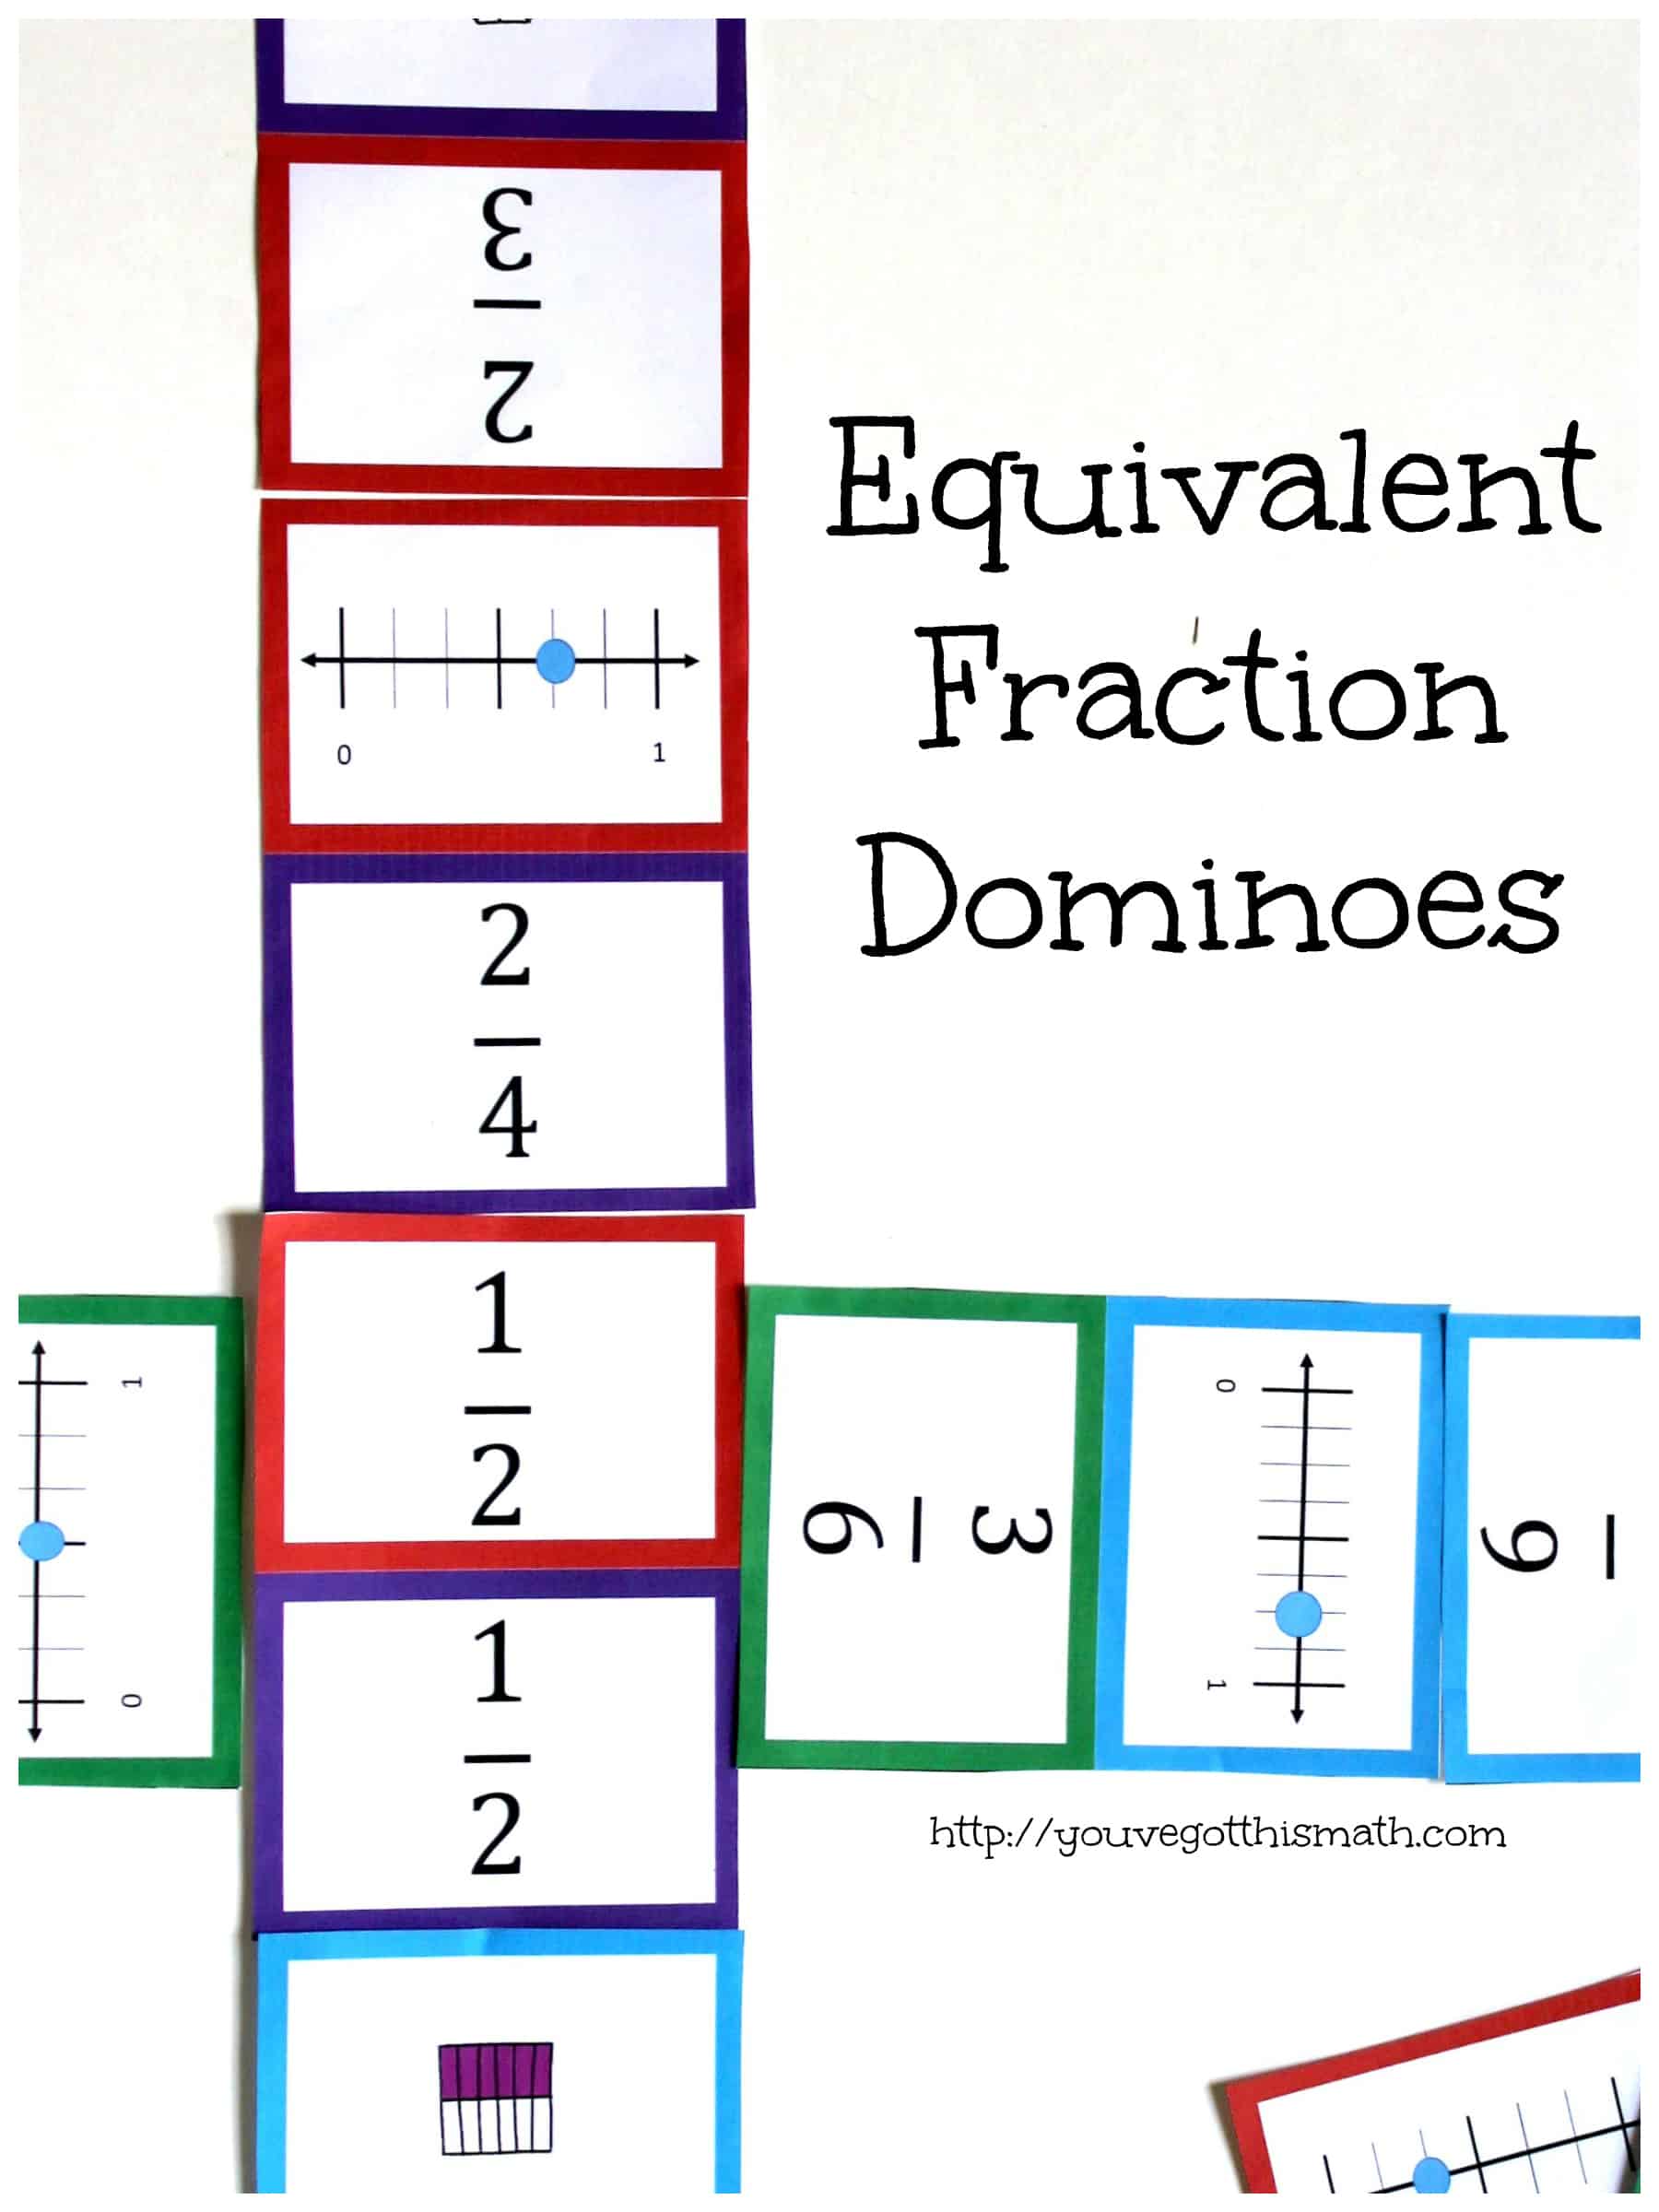 Equivalent Fraction Dominoes